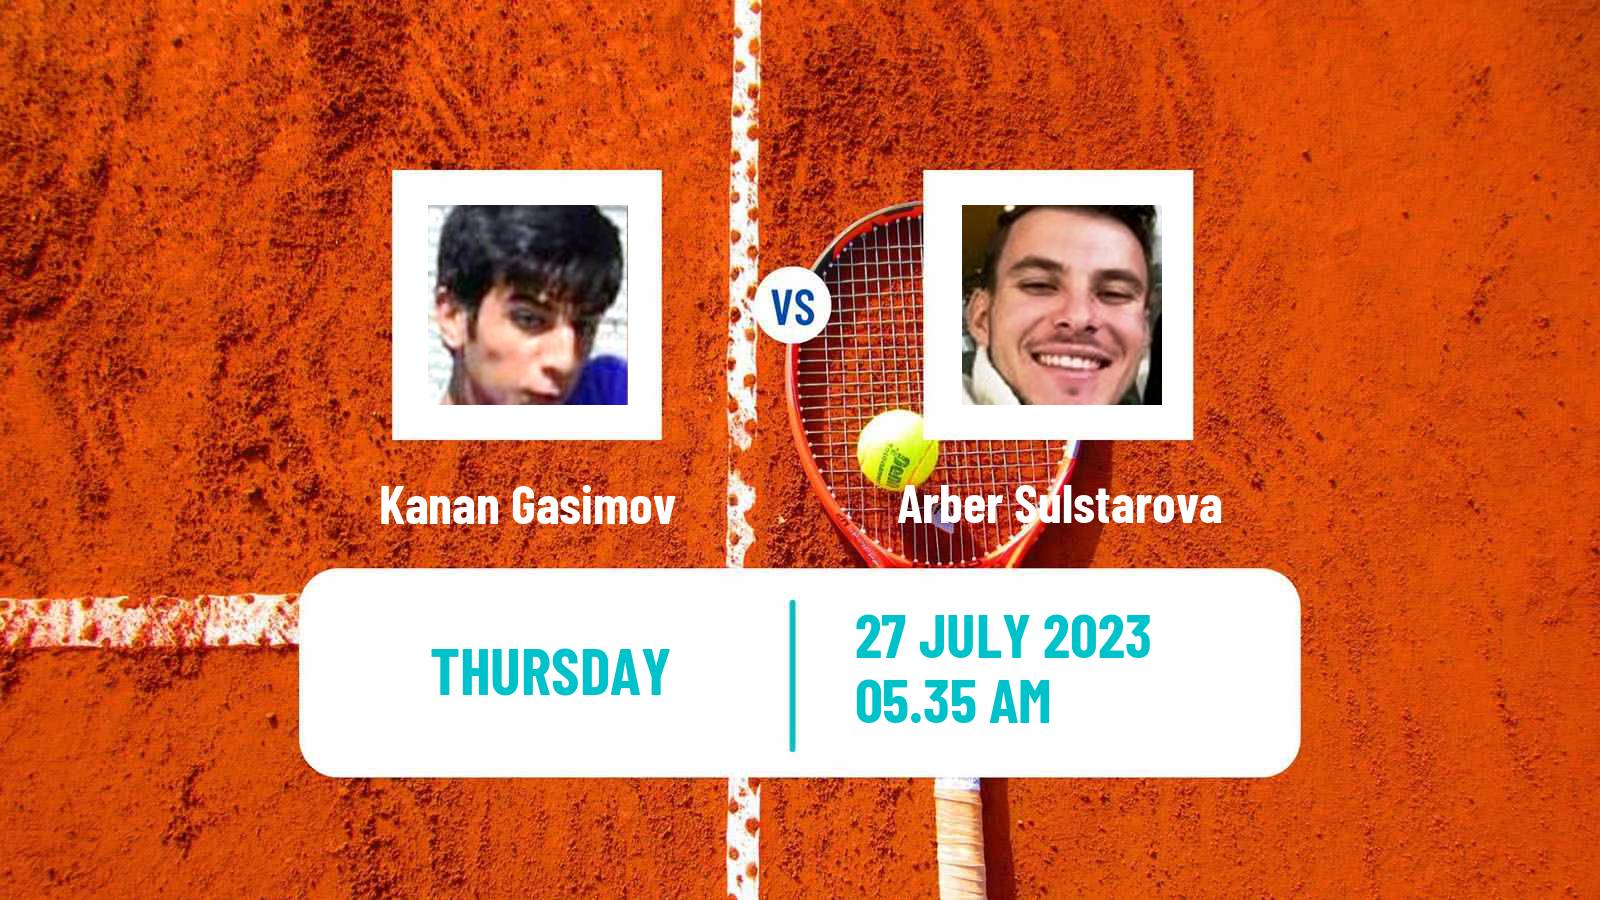 Tennis Davis Cup Group IV Kanan Gasimov - Arber Sulstarova